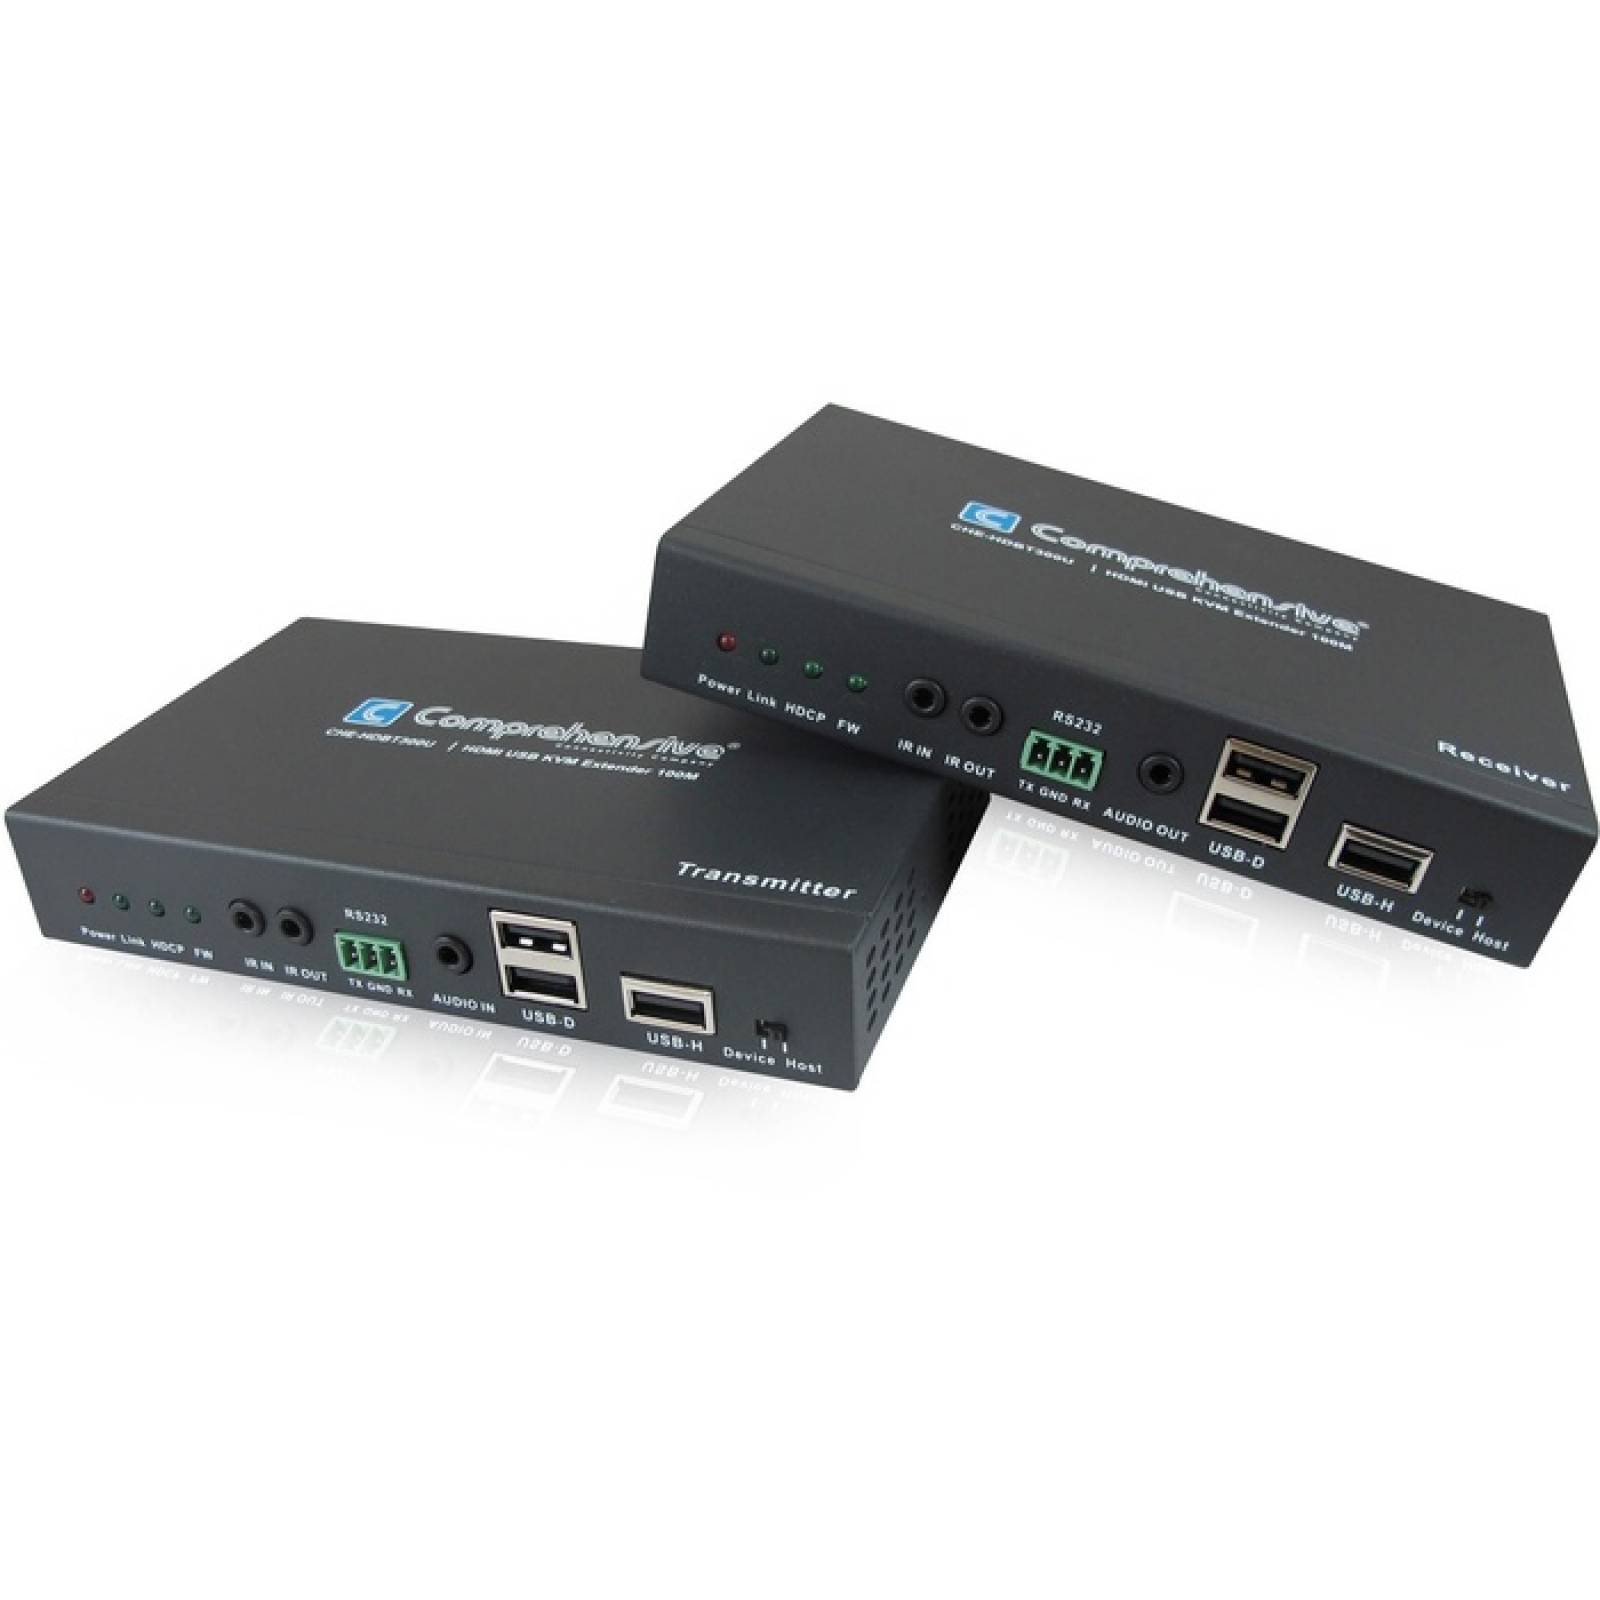 Extensor HDBaseT 20 completo de hasta 330 pies con USB  Transmisor y receptor